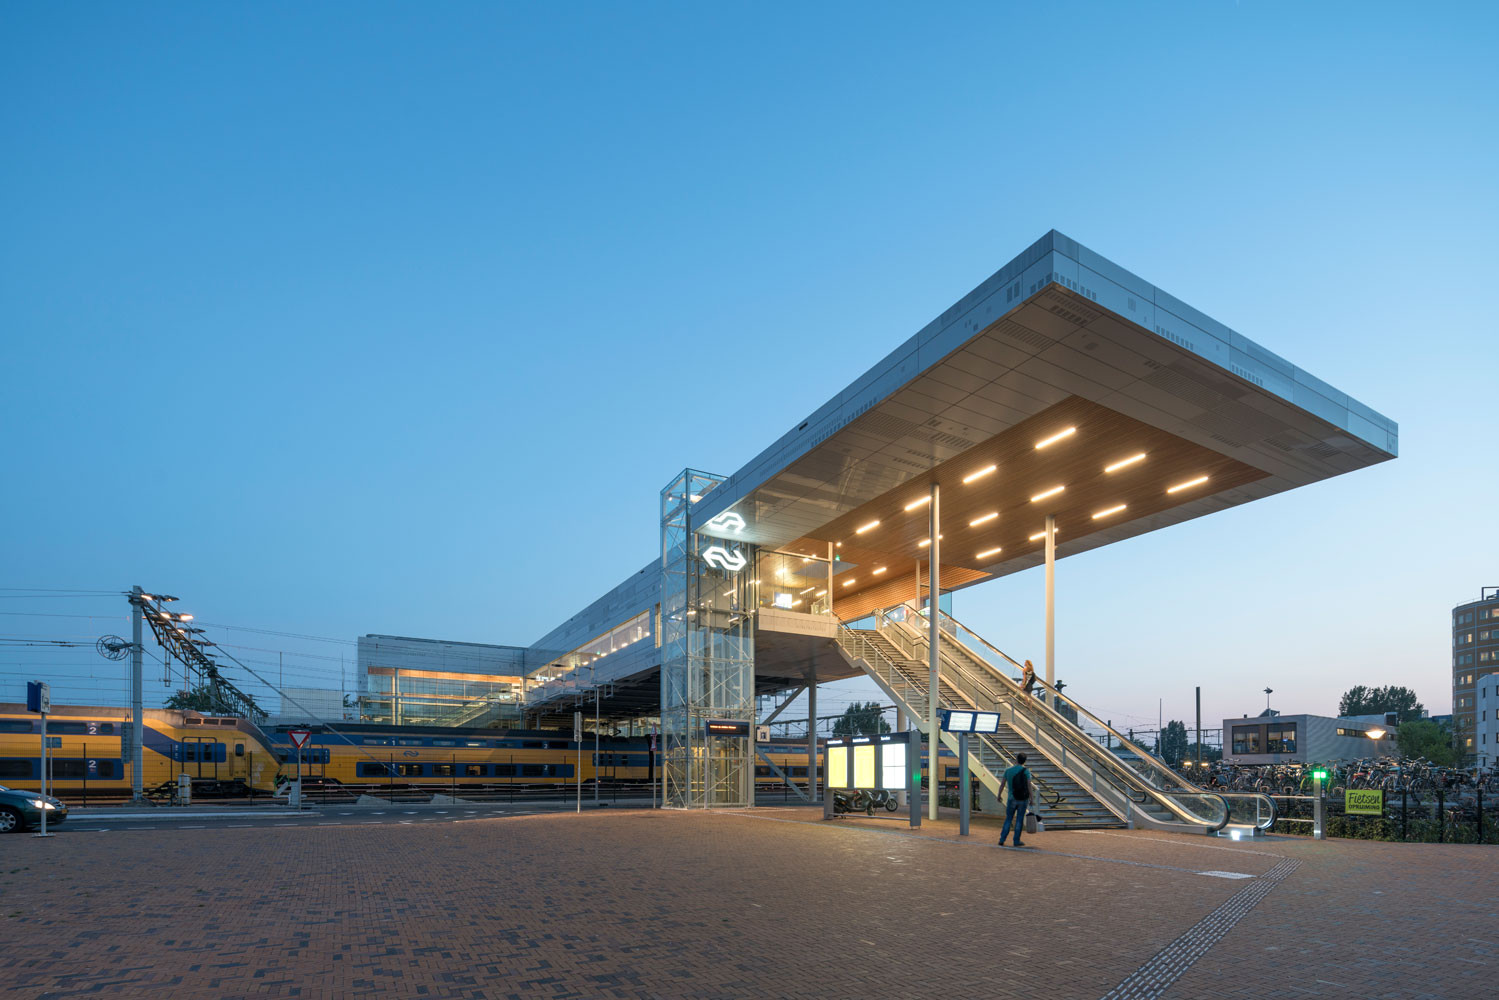 Het station in Alkmaar voorzien van MD Strekmetaal gevelbekleding